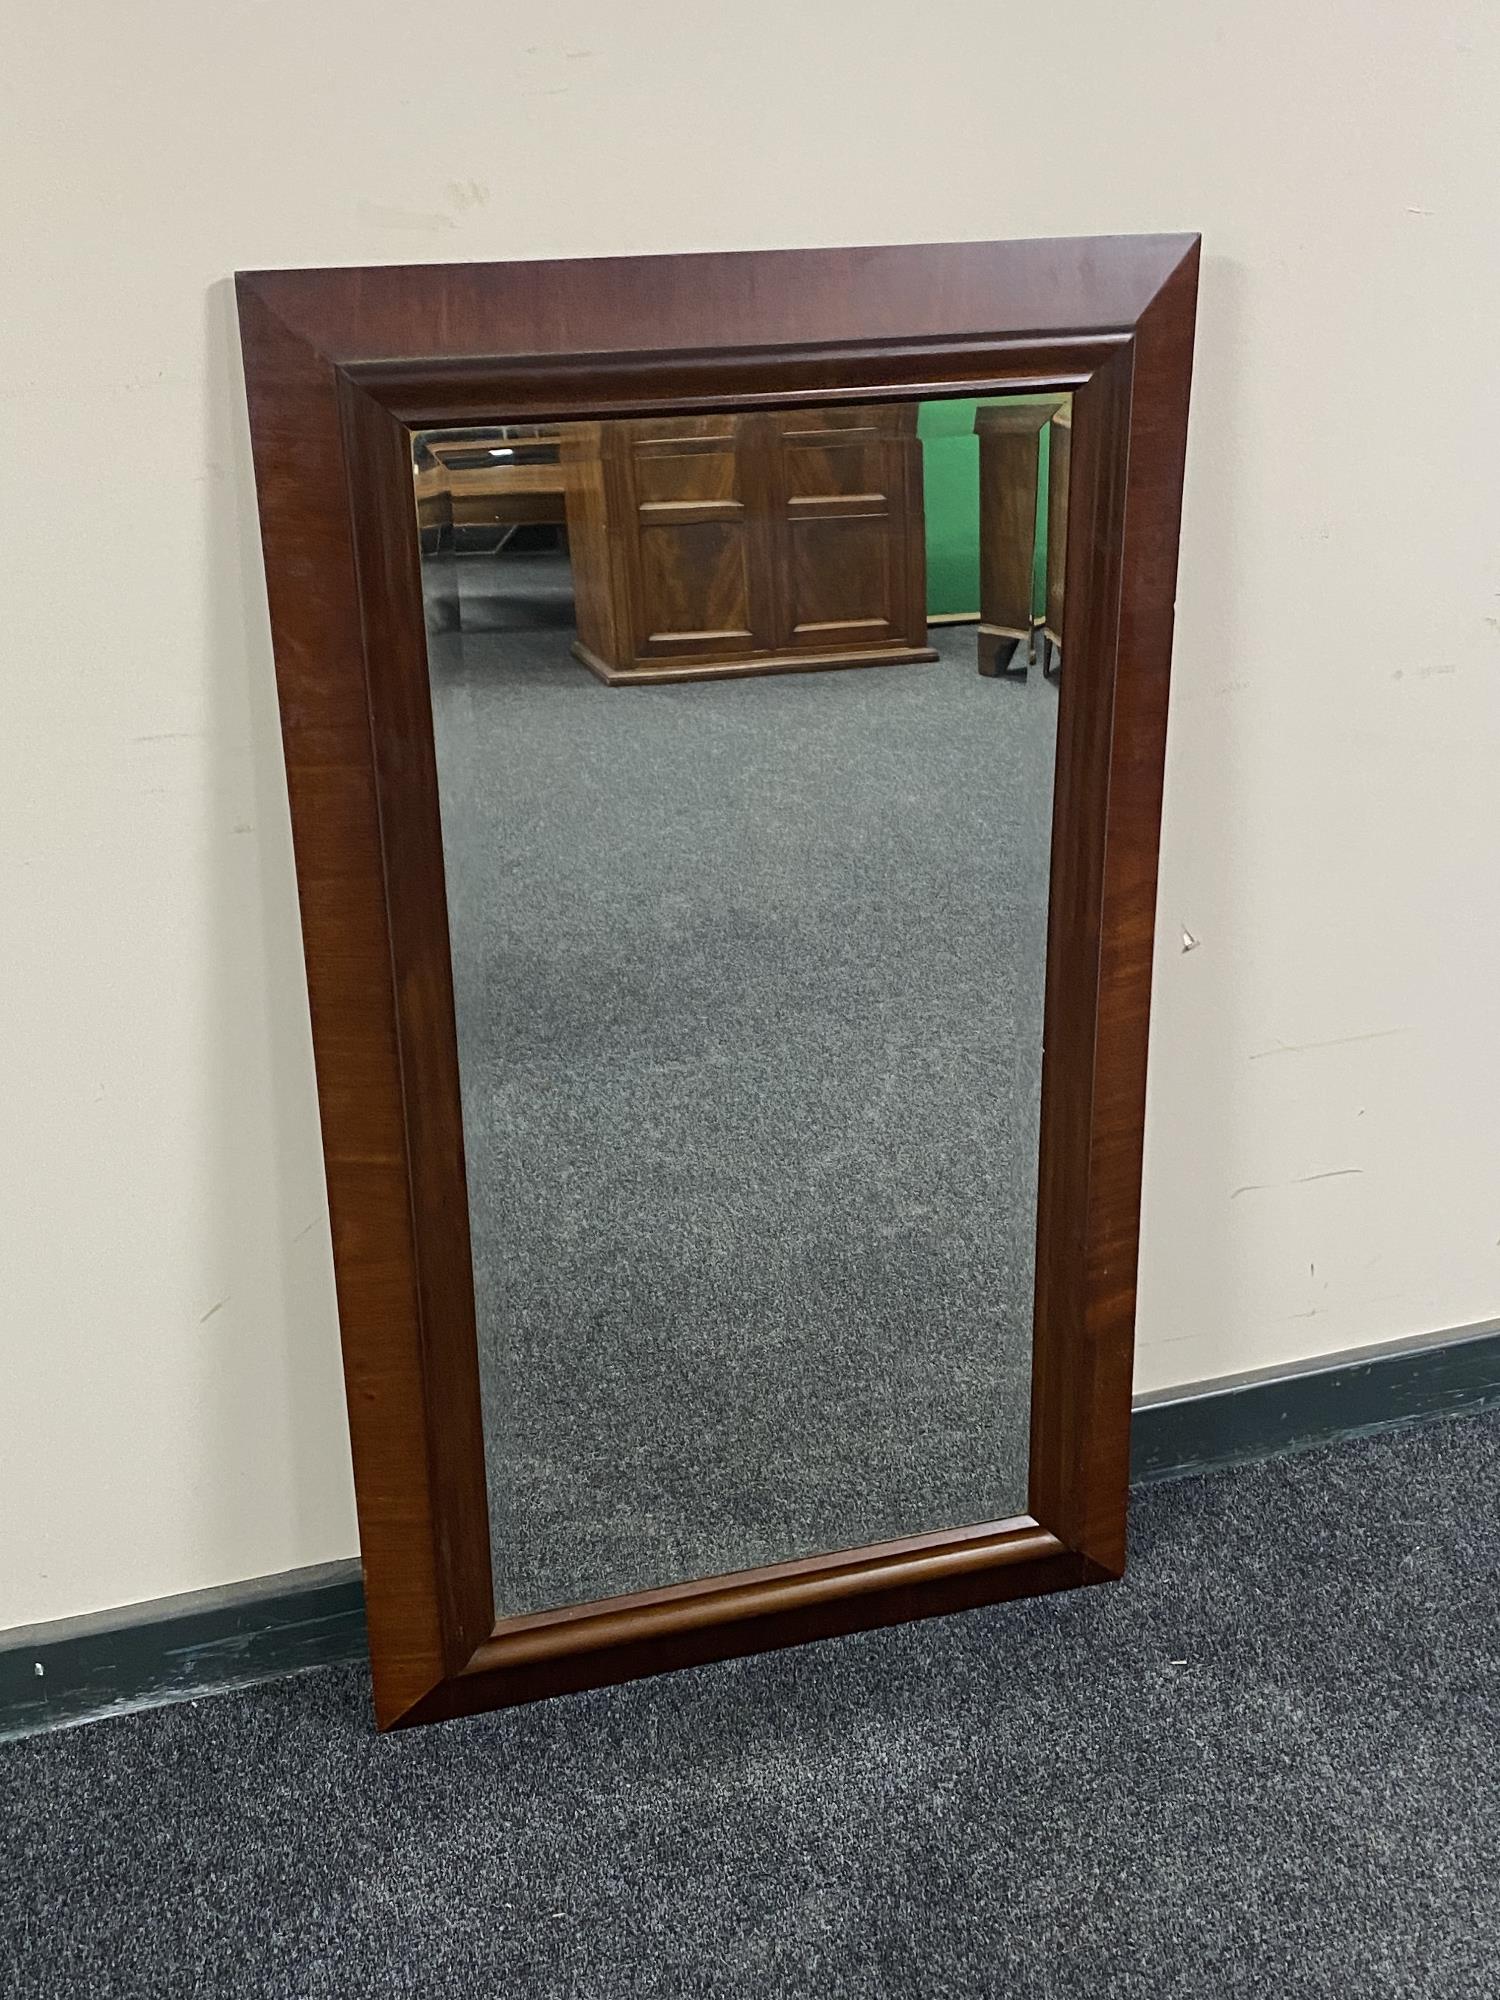 An antique mahogany framed wall mirror